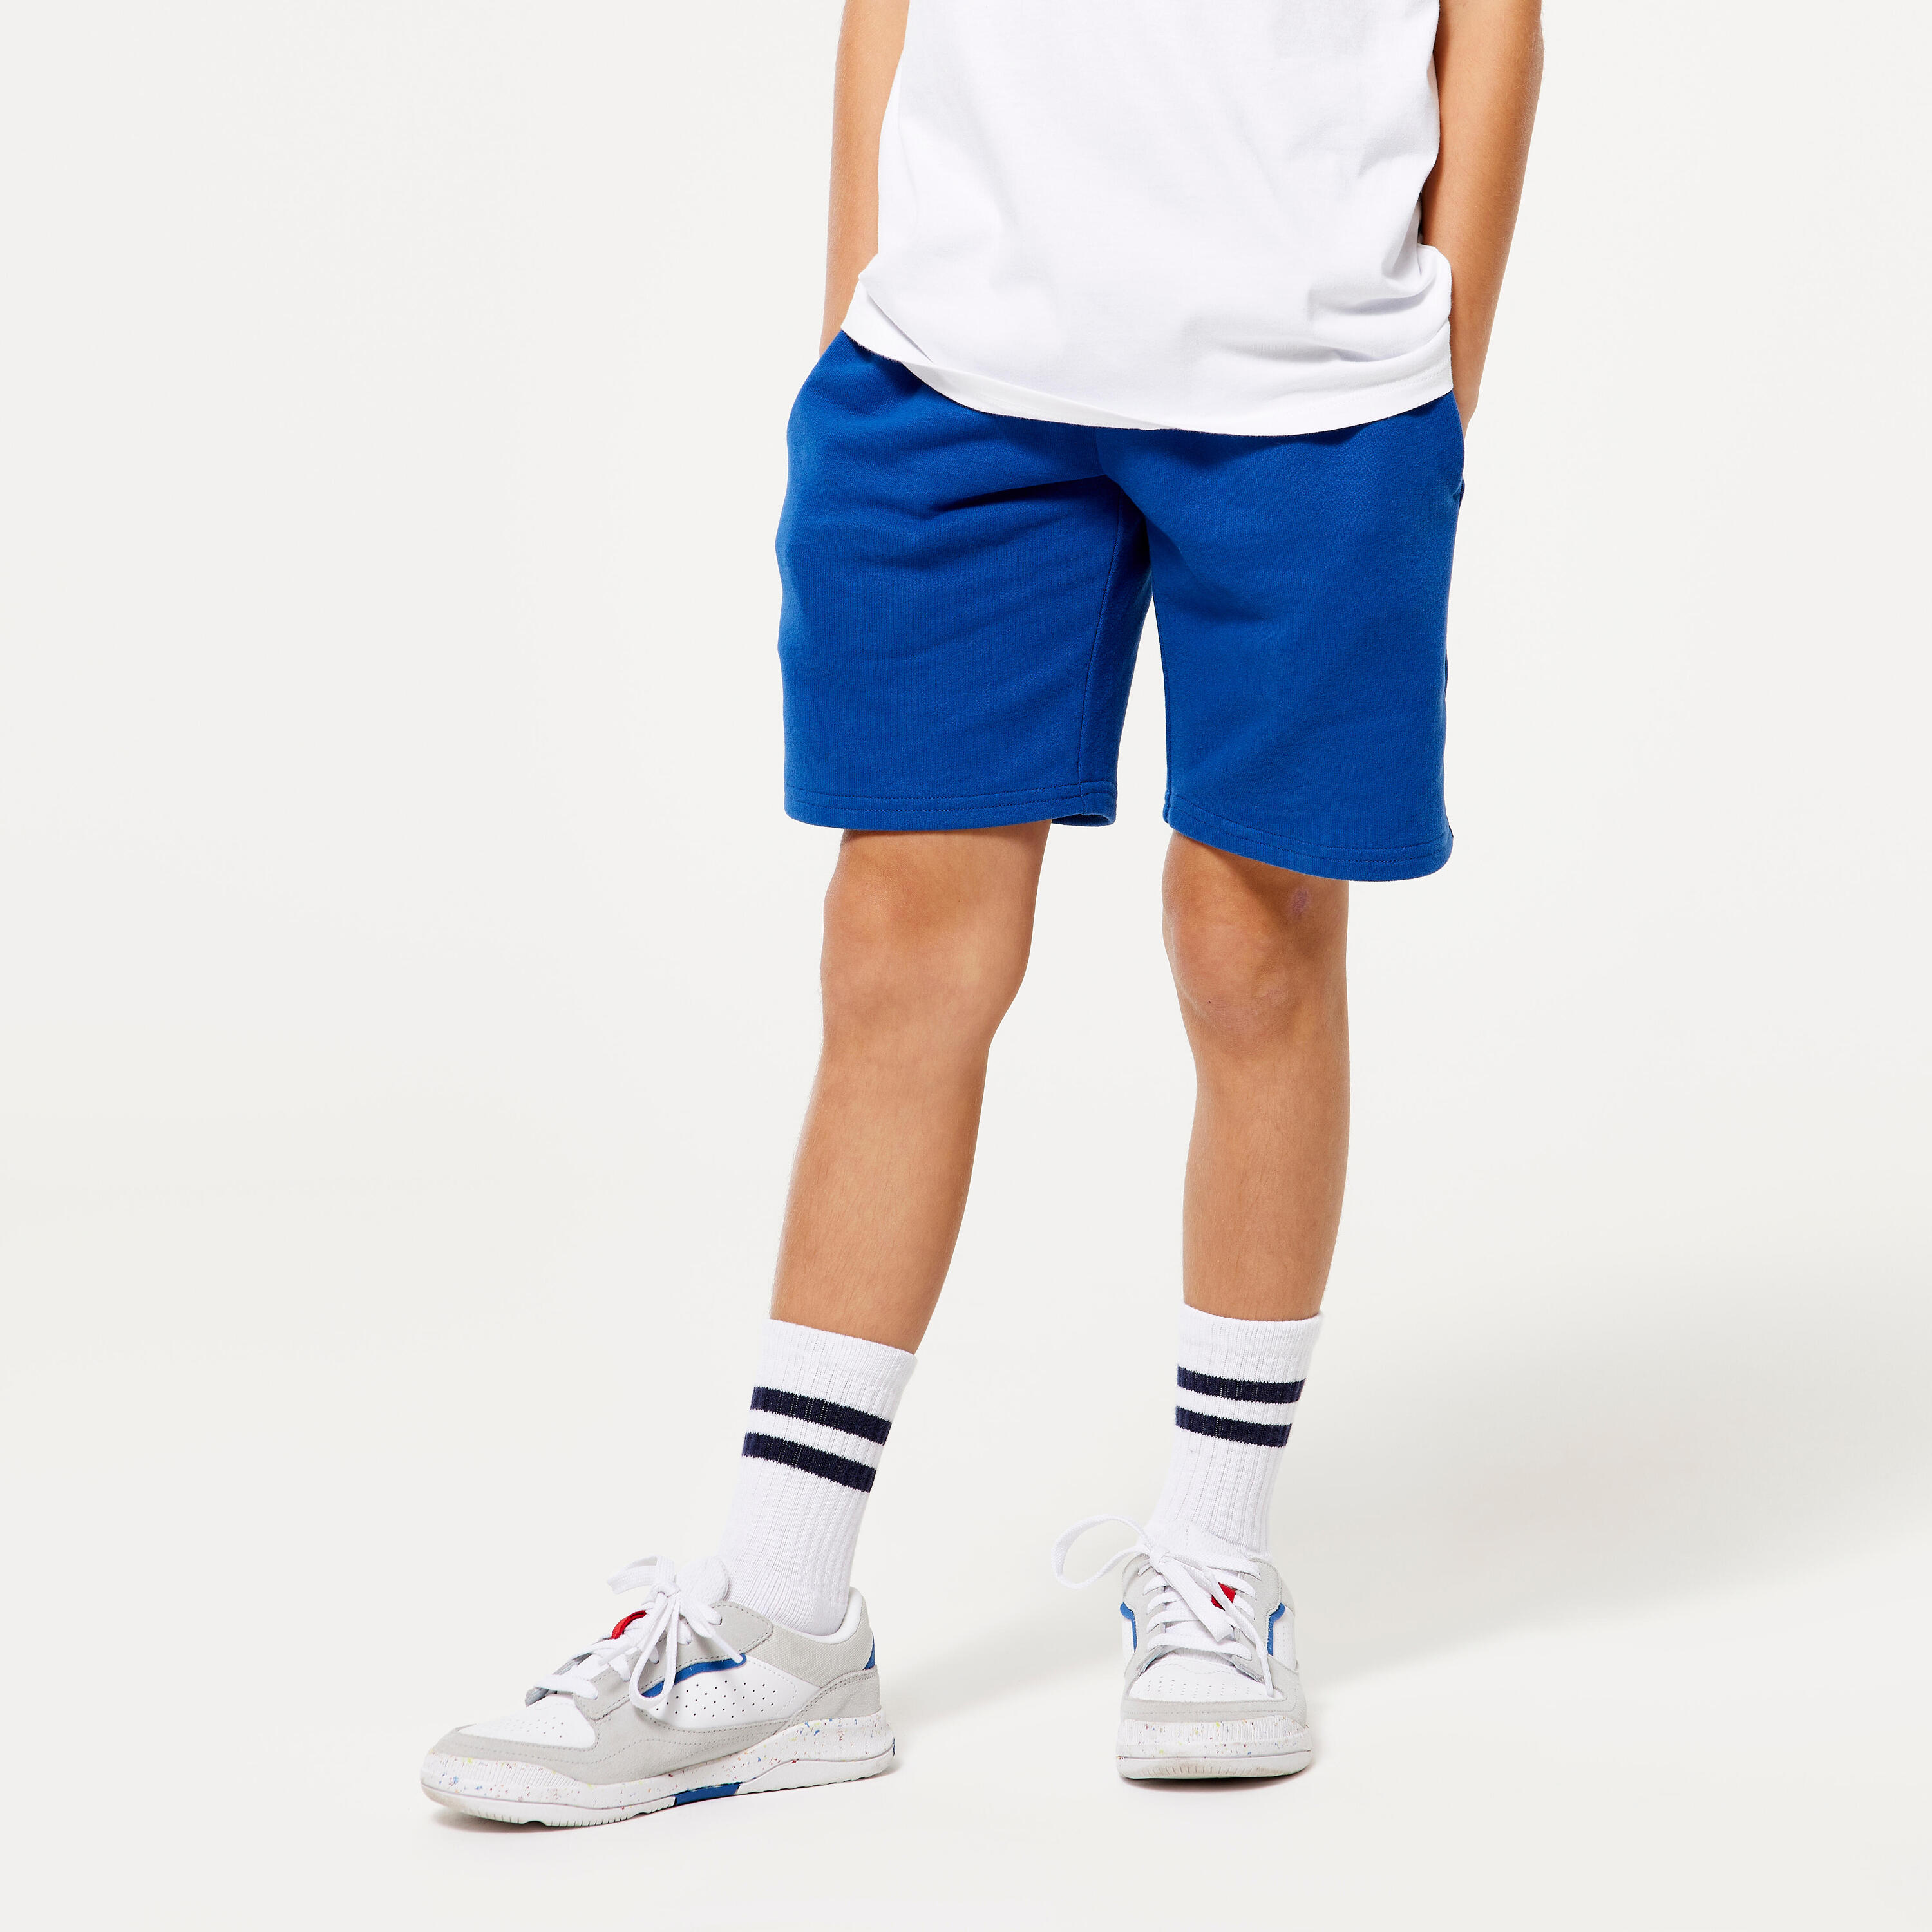 DOMYOS Kids' Unisex Cotton Shorts - Blue